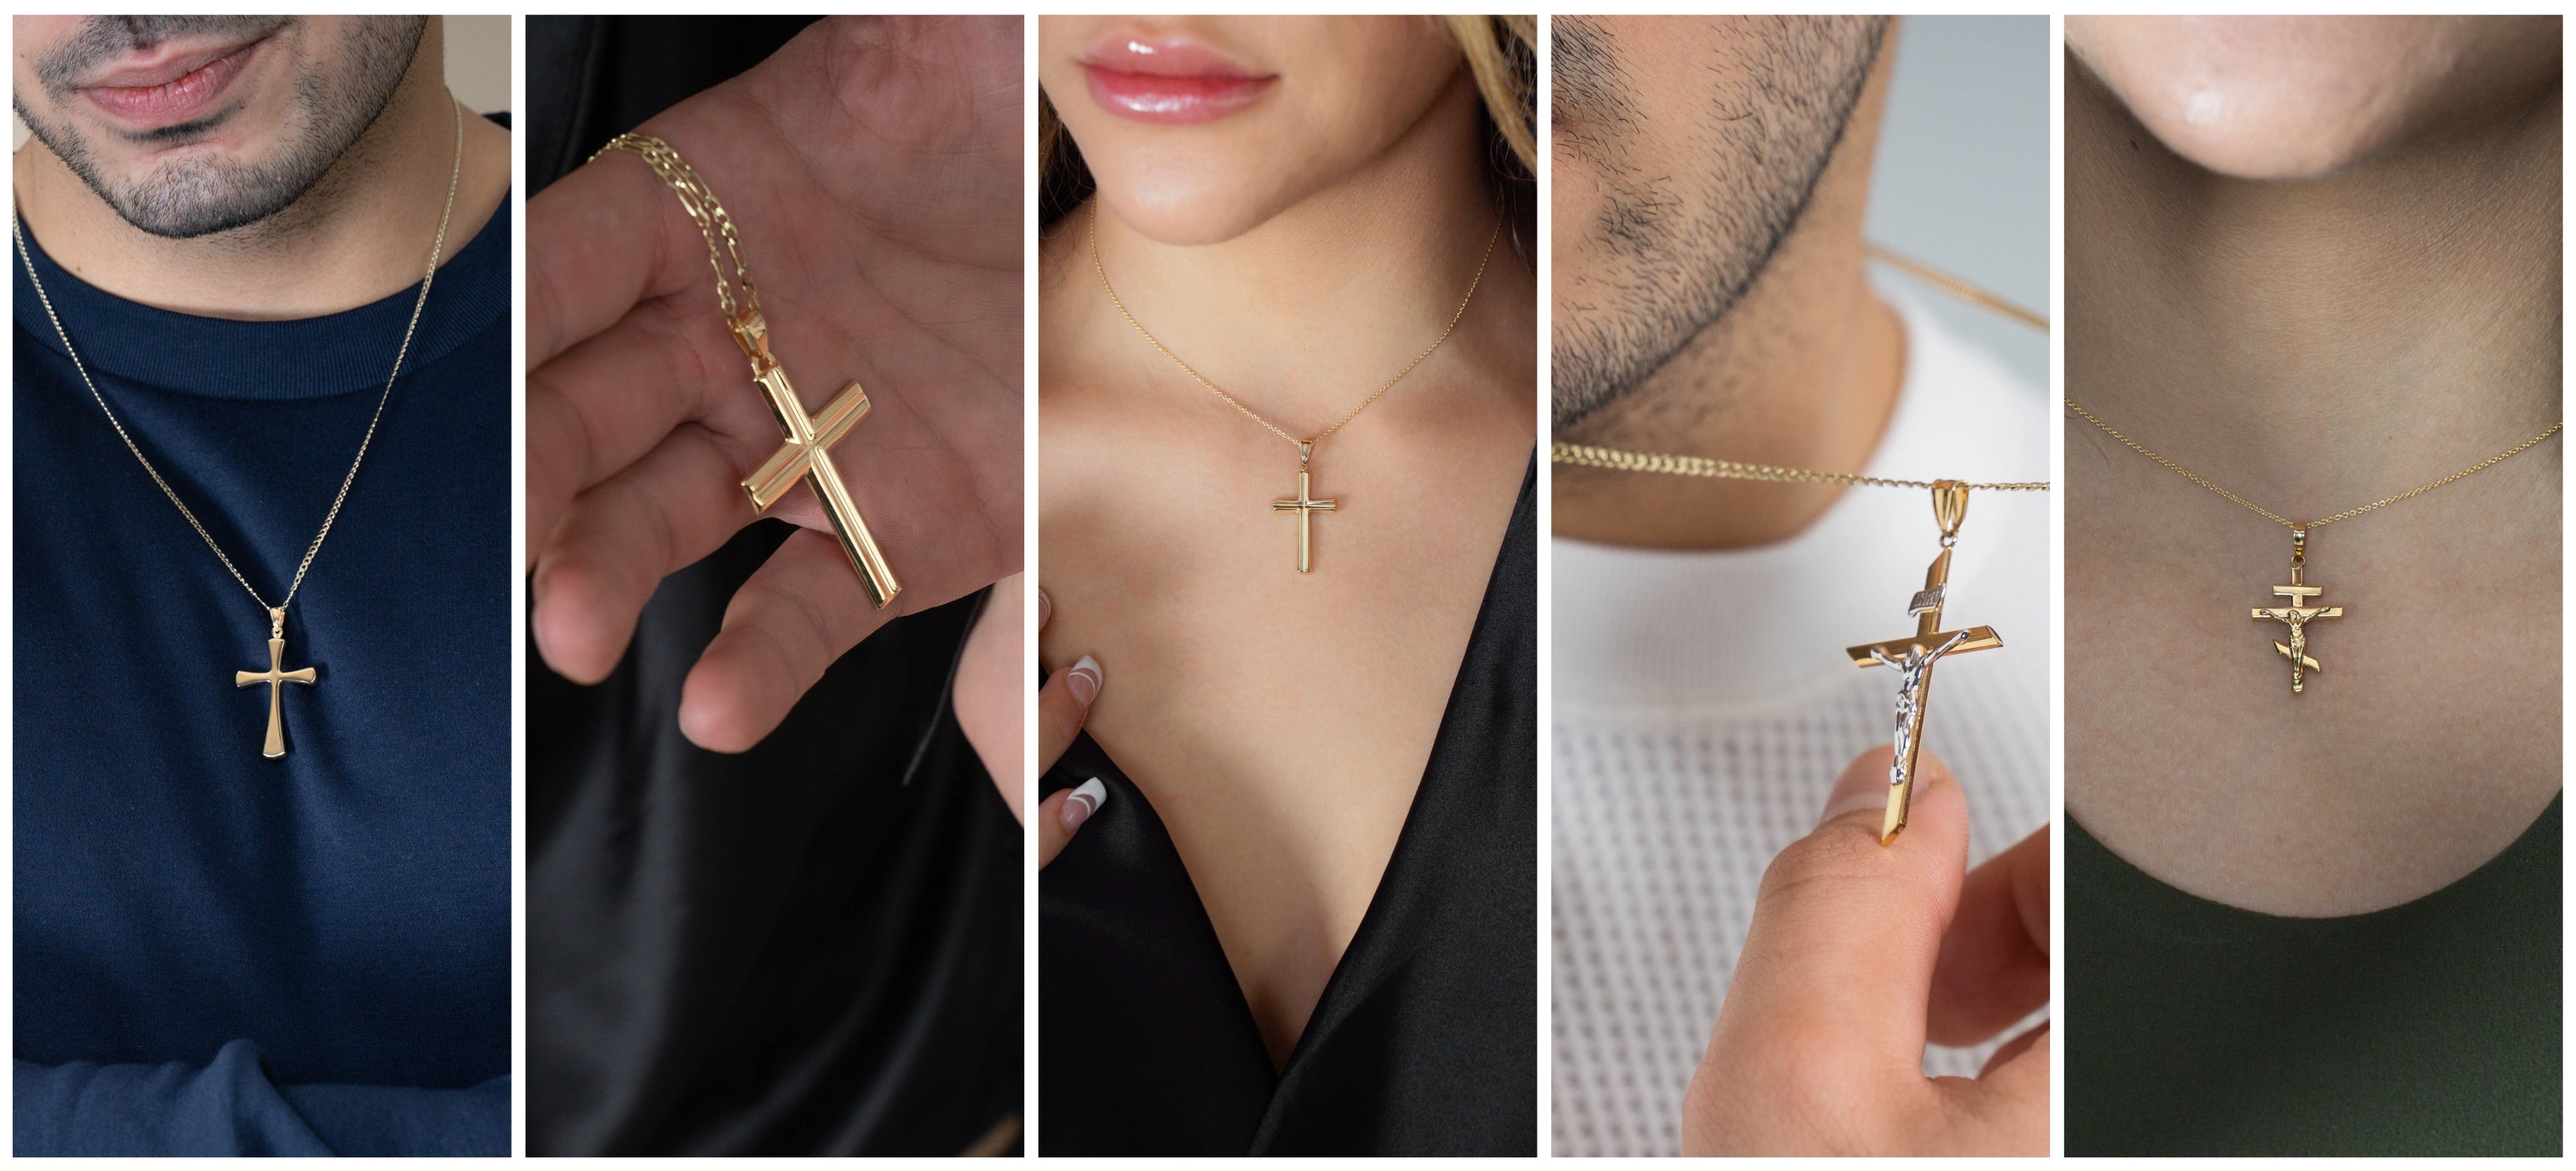 Tegembur Crystal Necklace for Men Women Healing Natural Stone Pendant  Necklace Adjustable Rope Reiki Quartz Spiritual Jewelry Necklaces  (Amethyst) | Amazon.com